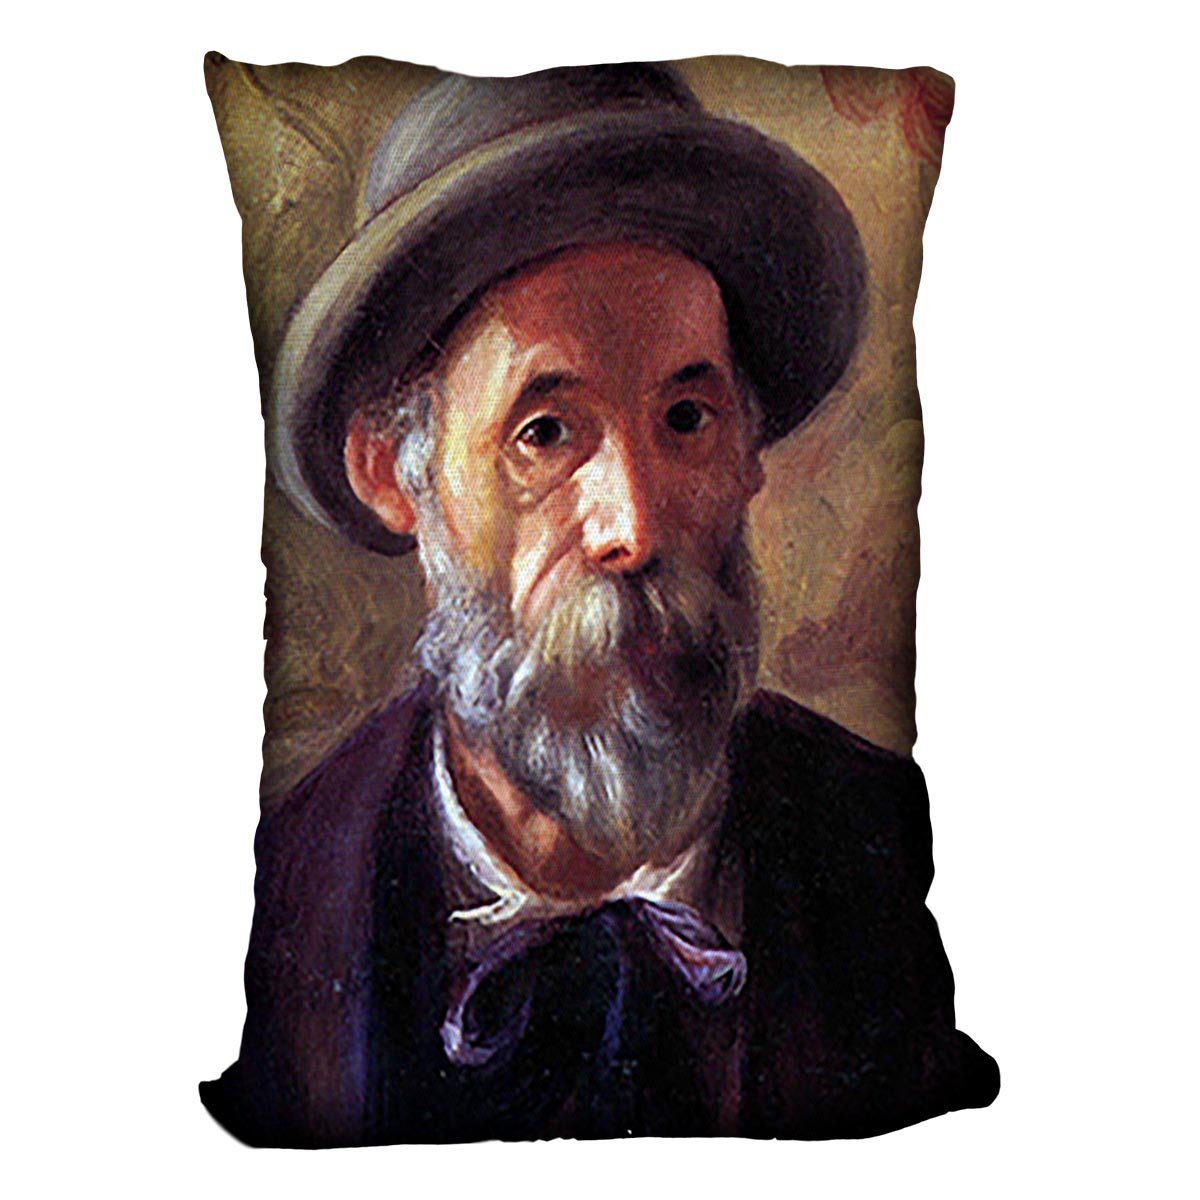 Self Portrait 1 by Renoir Throw Pillow